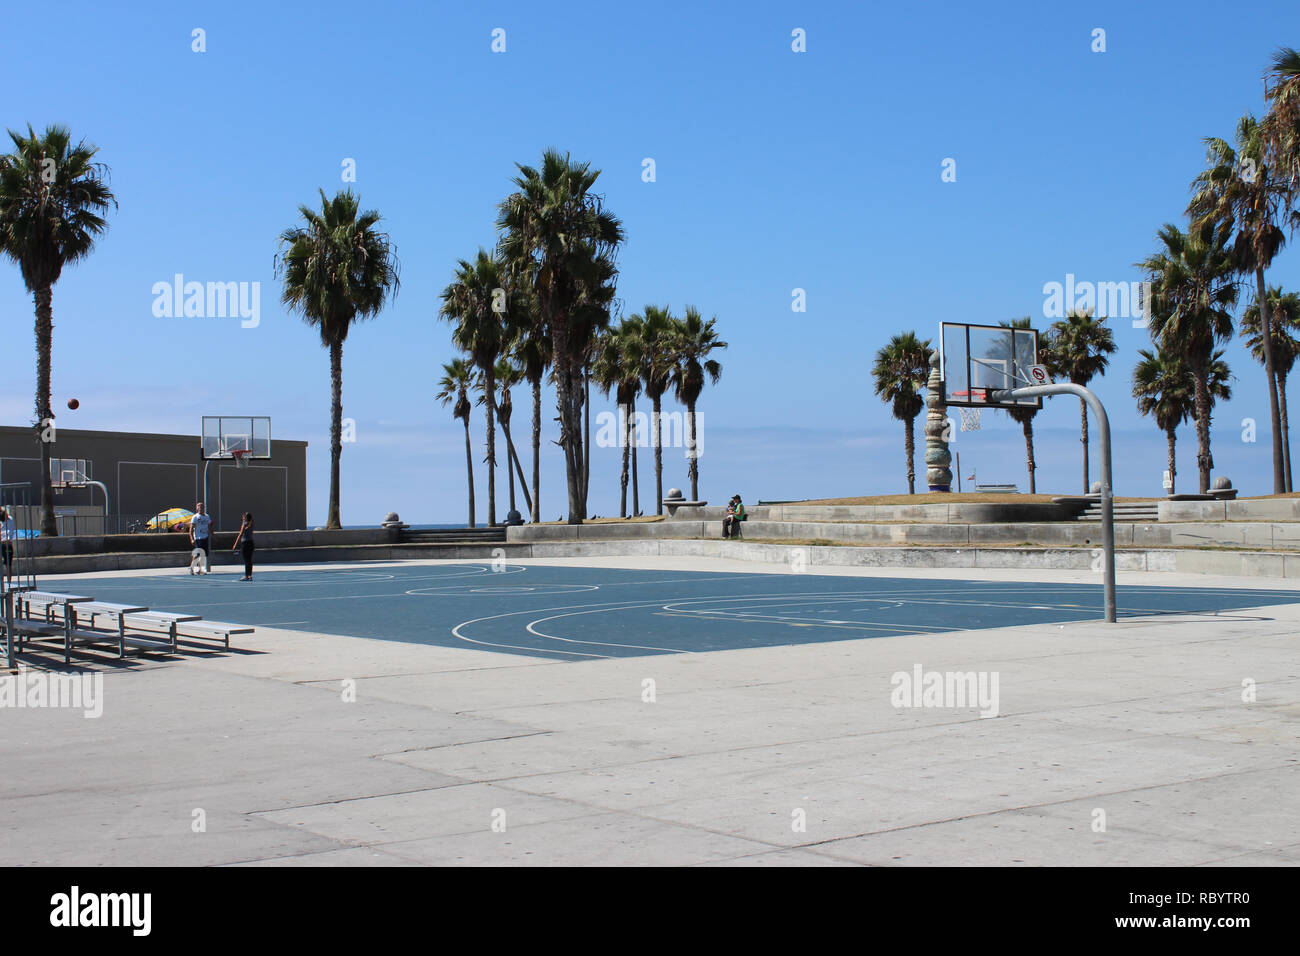 Basketball court on Venice beach California Stock Photo Alamy